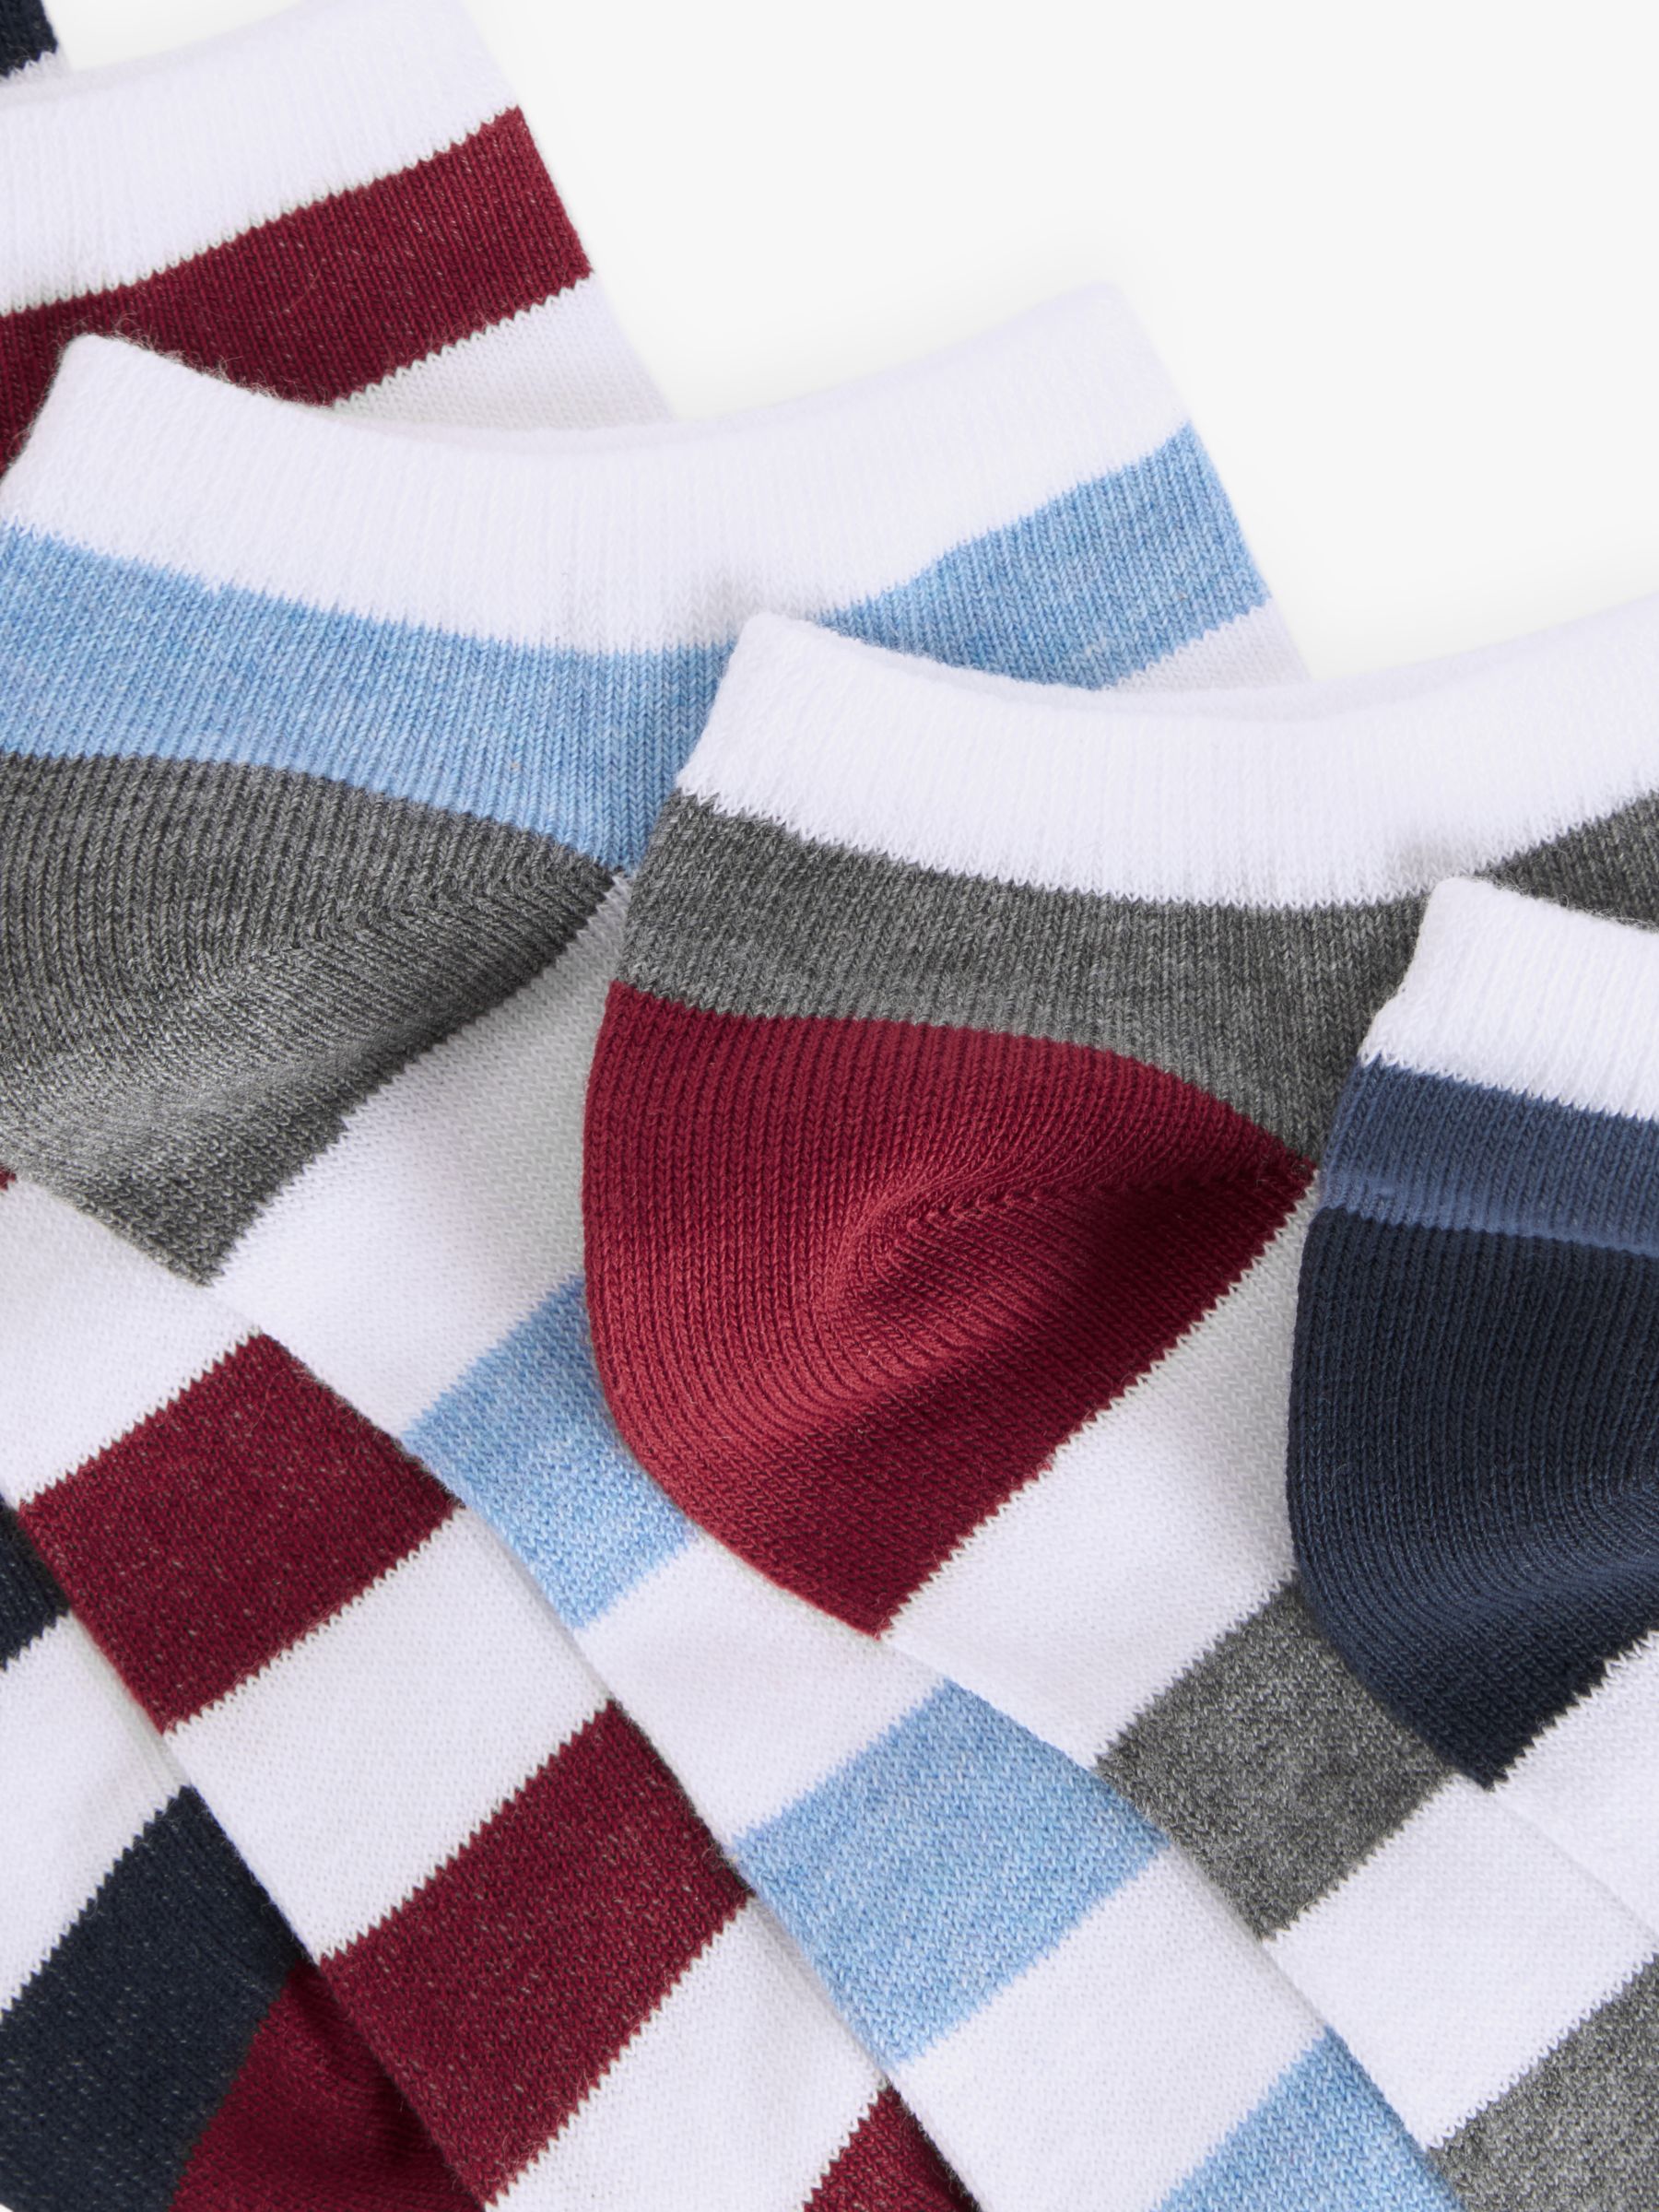 Buy John Lewis Rugby Stripe Trainer Socks, Pack of 5, Black/Red/Blue/Grey Online at johnlewis.com